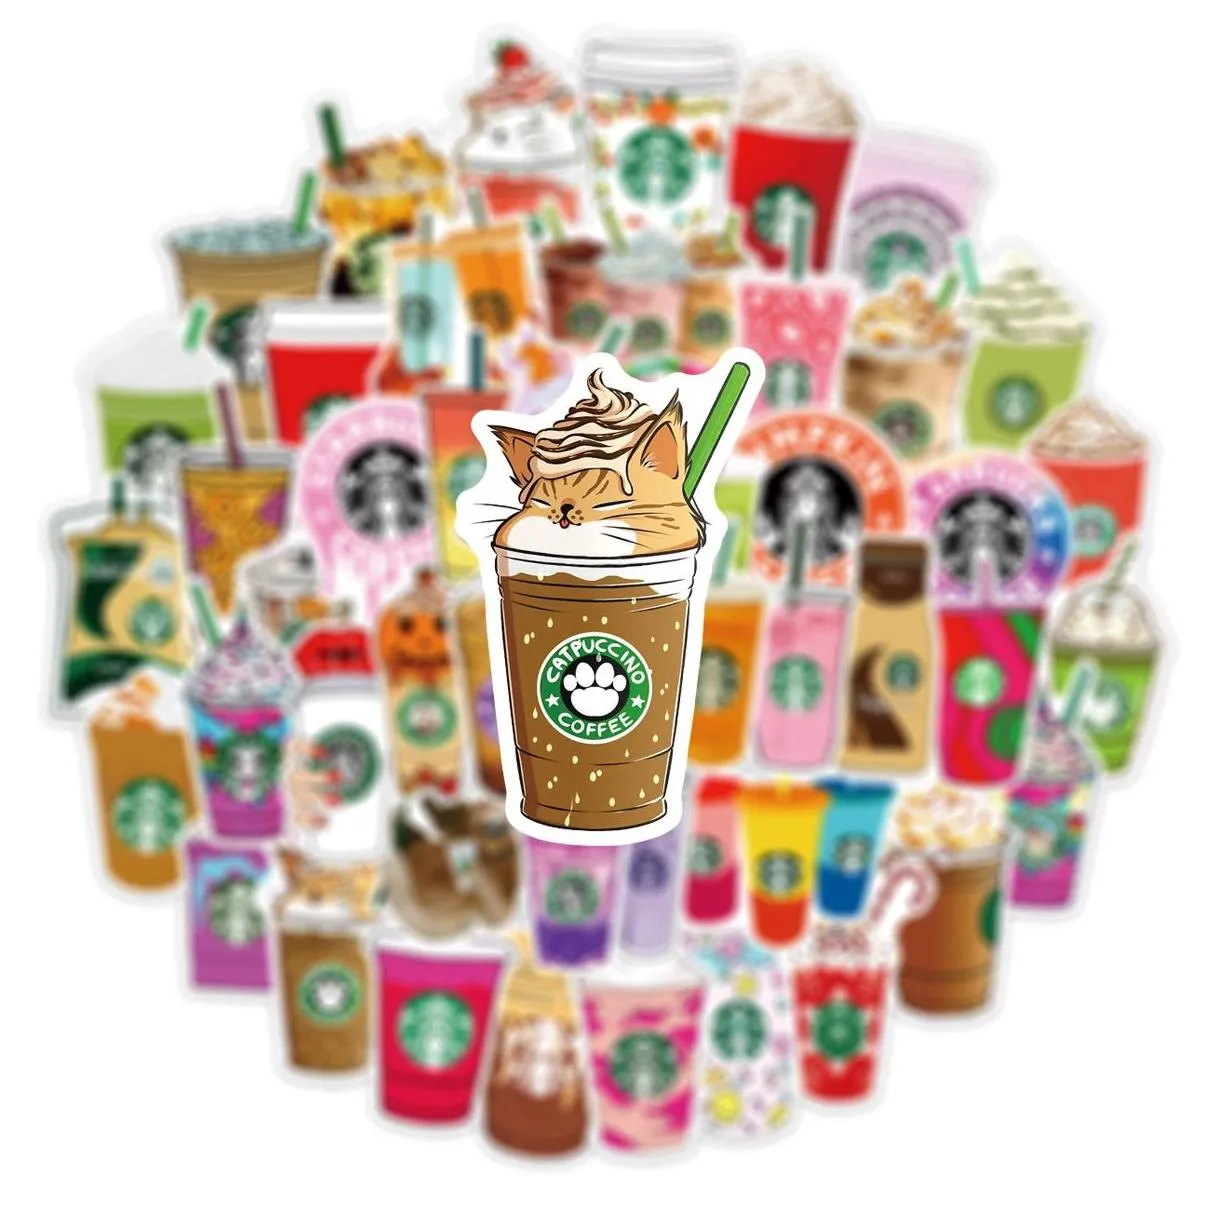 54 starbucks coffee milk tea mugs graffiti stickers laptop luggage car stickers